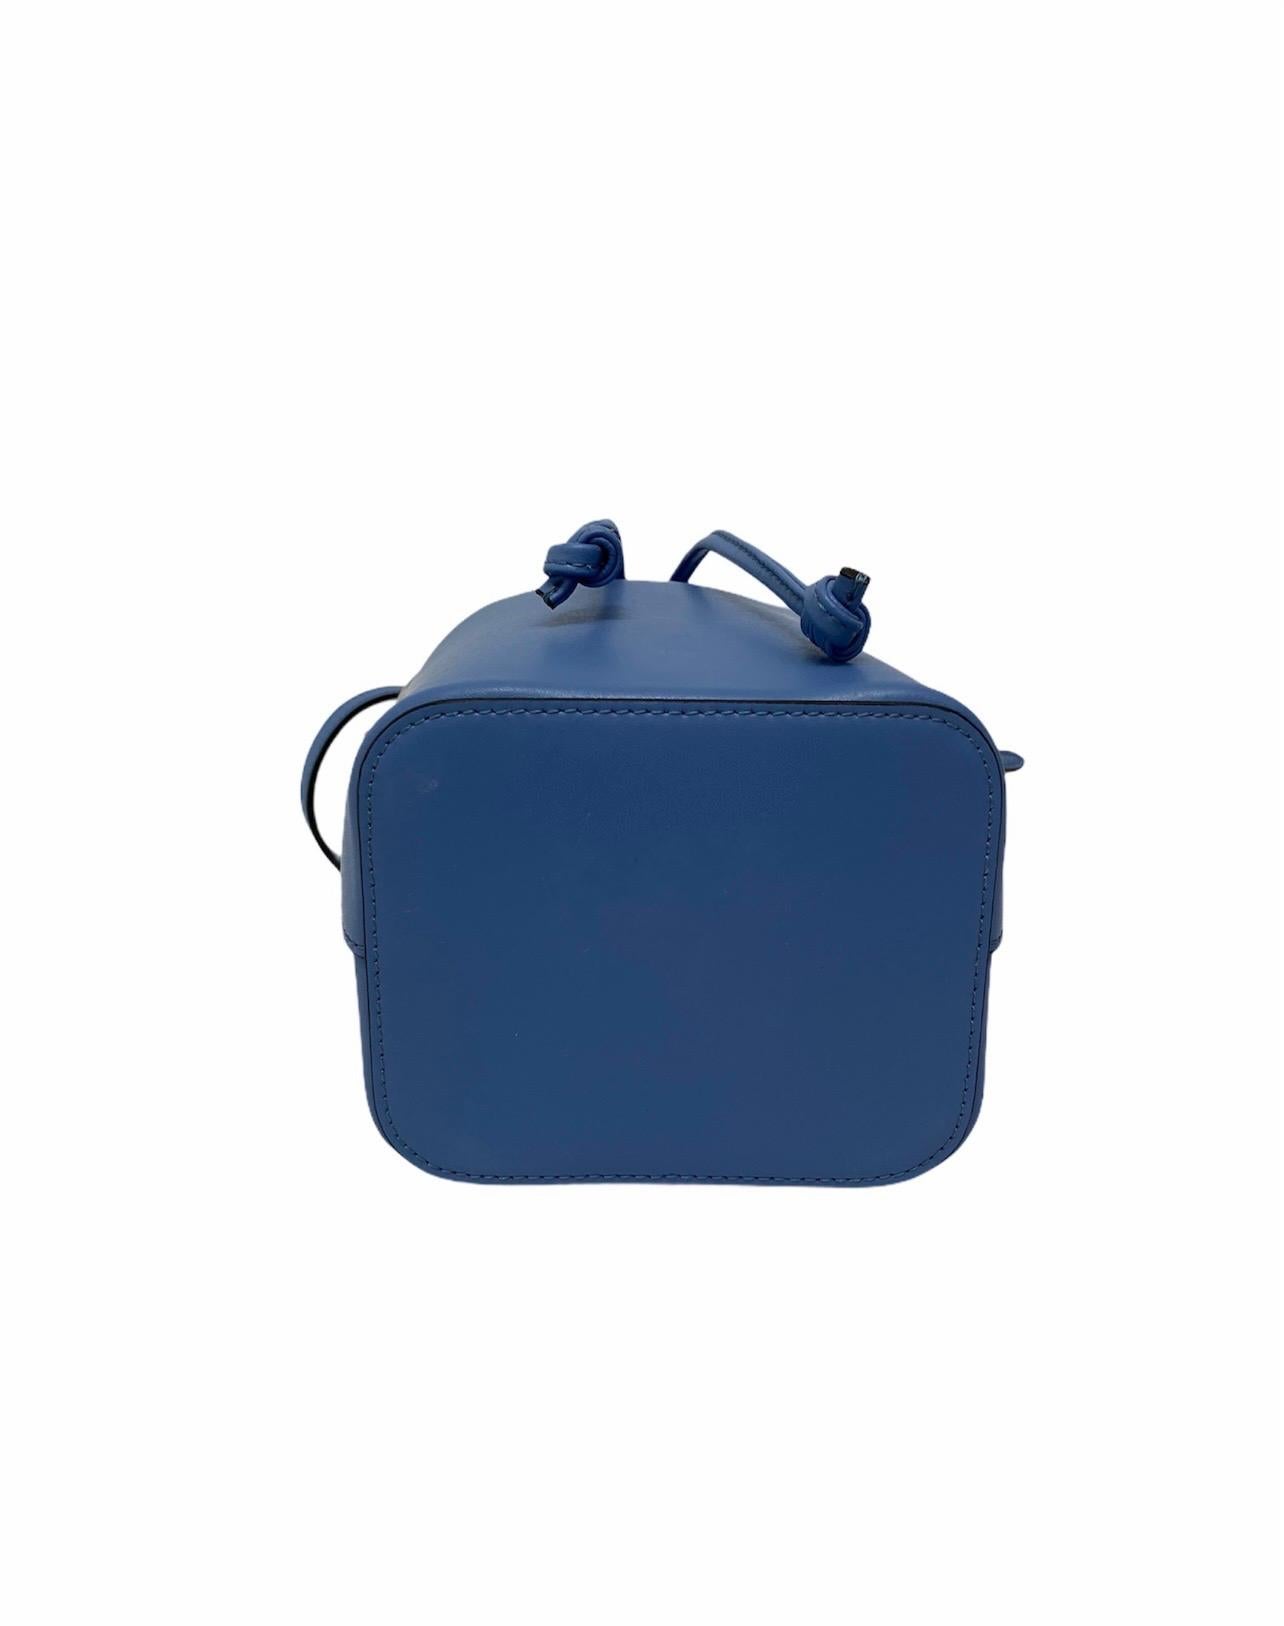 Women's Fendi Light Blue Leather Bucket Bag